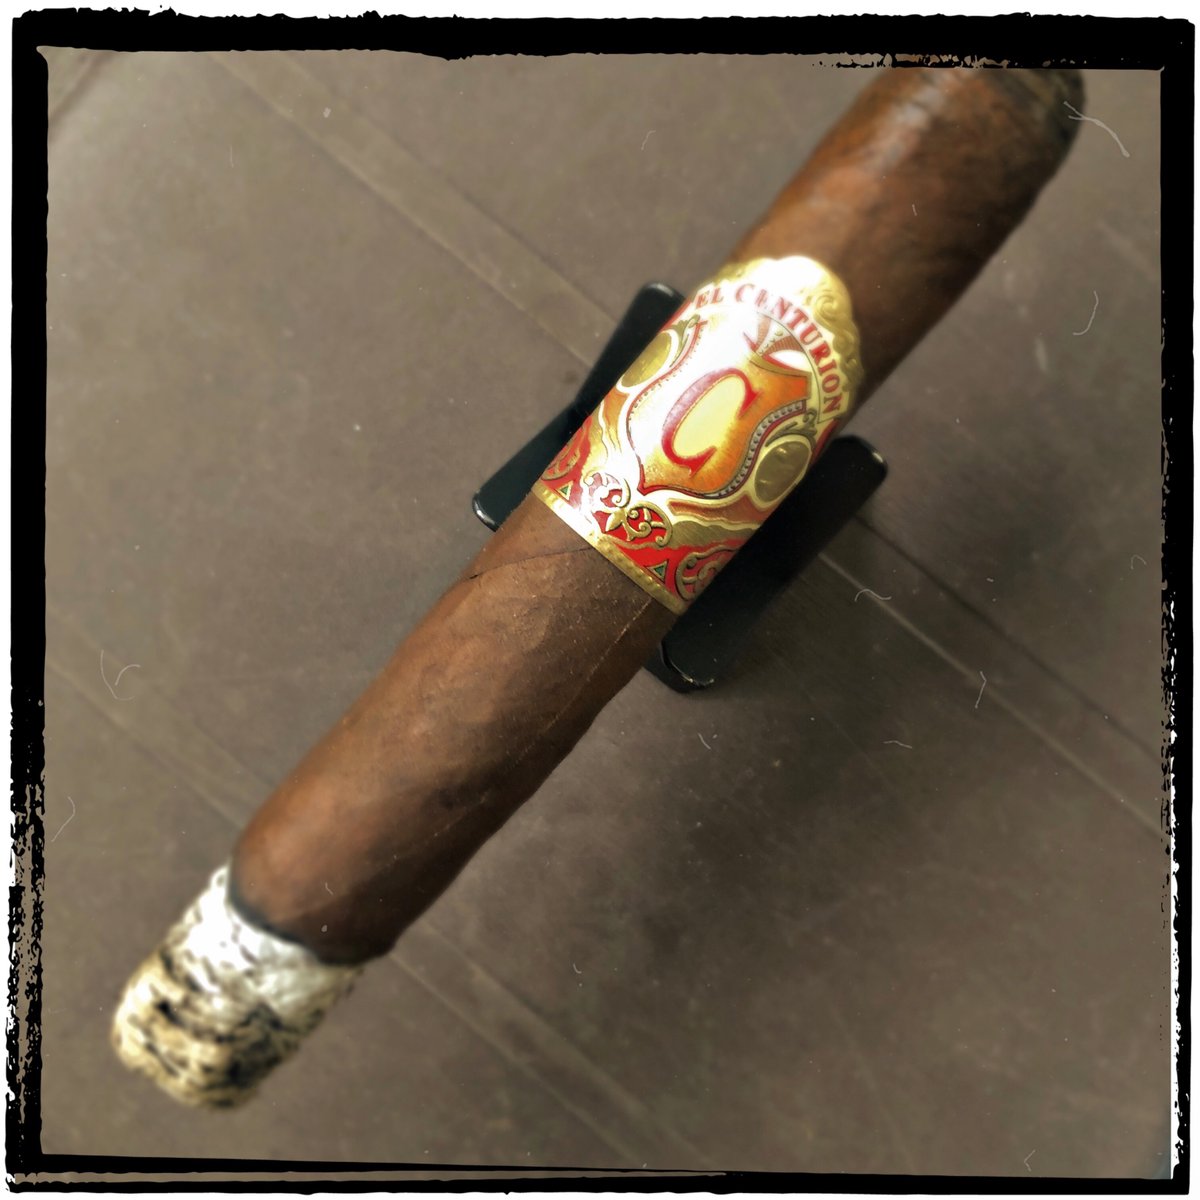 Enjoying a My Father El Centurion Toro Grande  cigar! #CigarScanner #MyFatherElCenturionToroGrande #MyFatherCigars #cigars #cigarlife #cigaraficionado #cigarporn #cigarsociety #cigaroftheday #cigarlover #cigarsmoker #cigarlifestyle #cigarworld #PurosAmigosRD